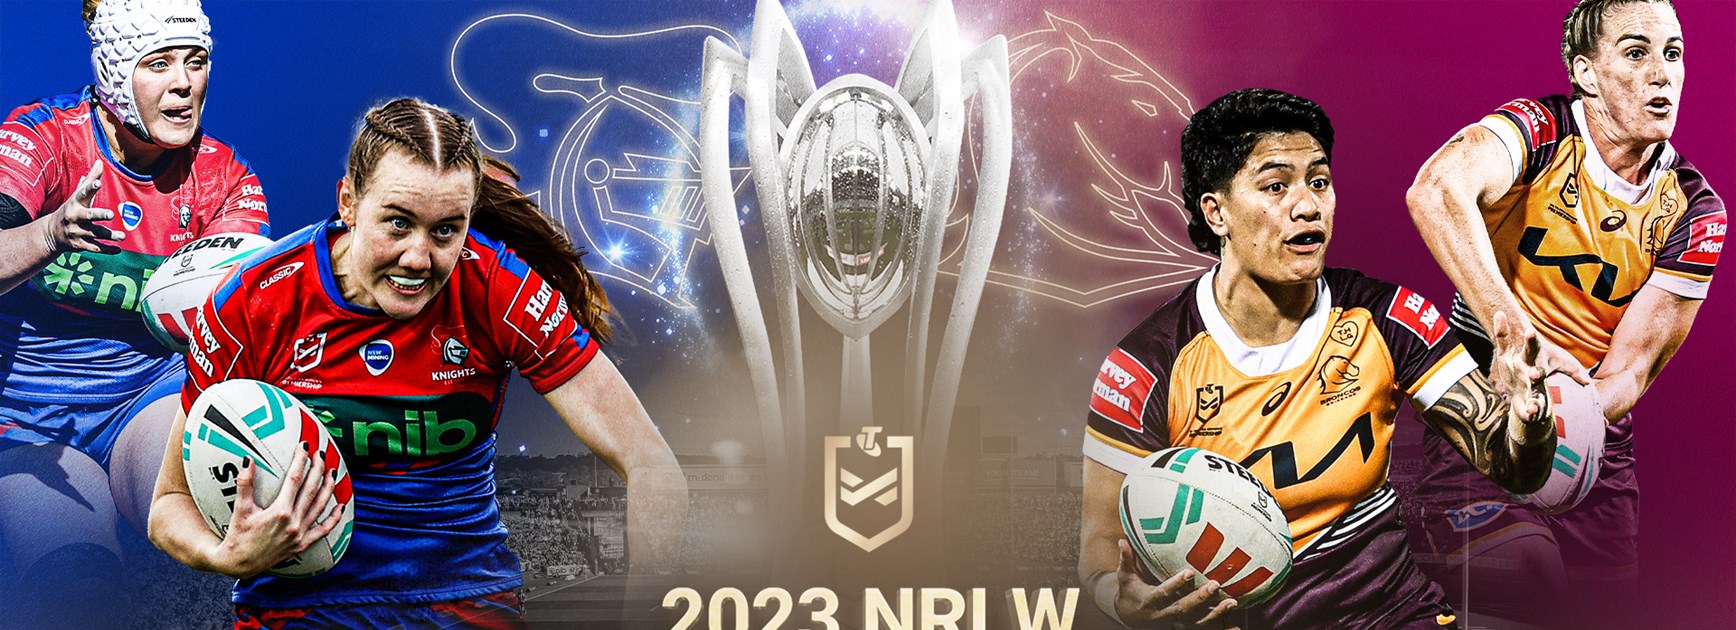 Defend the Kingdom: NRLW Semi-Final preview